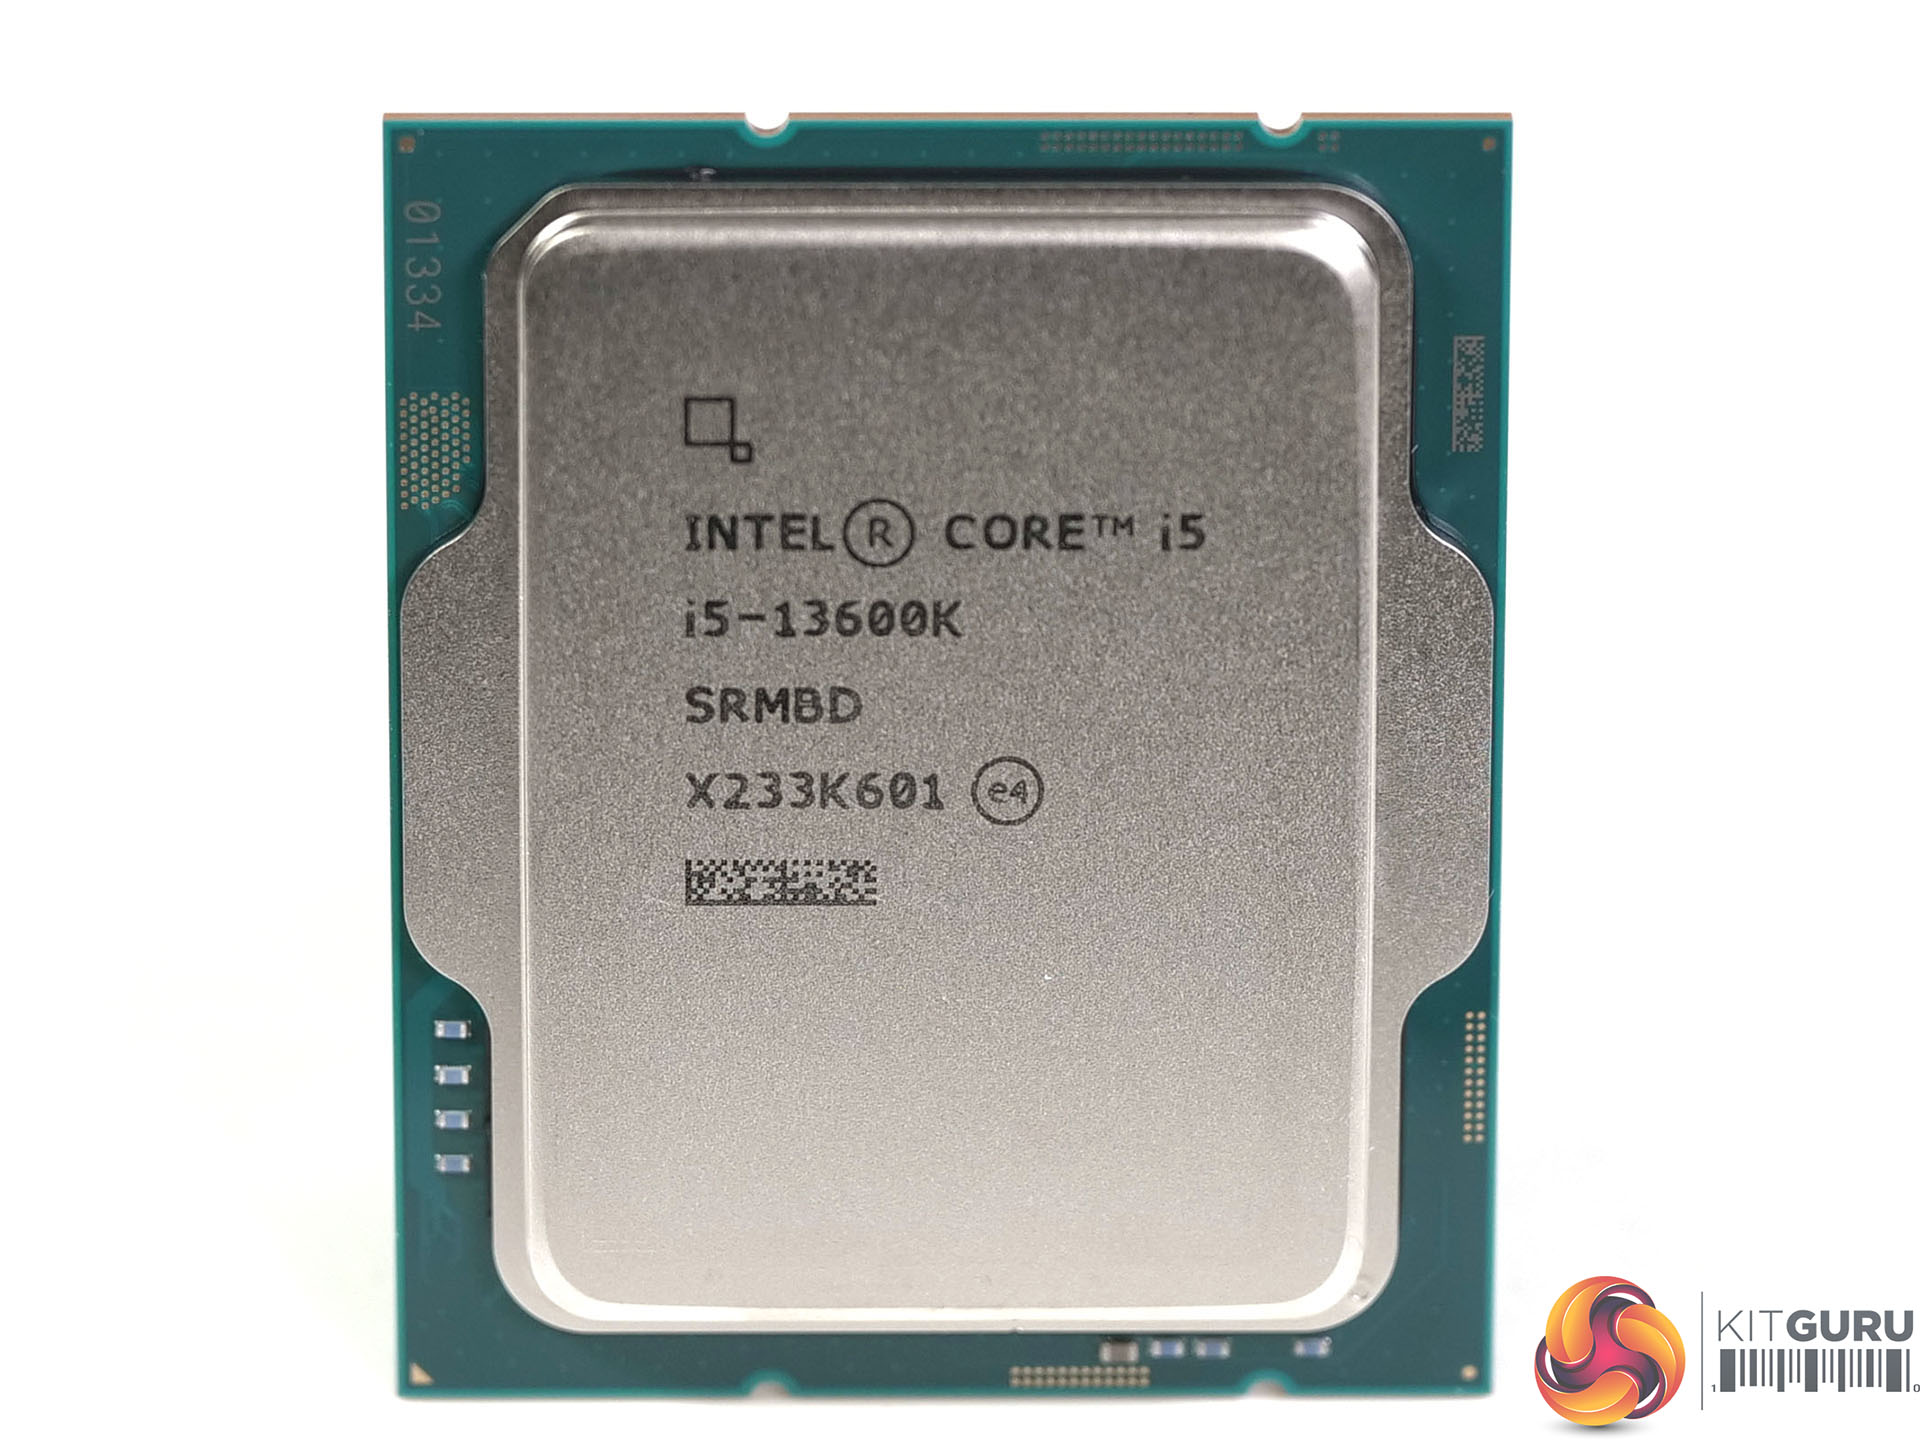 Le Core i5-13600K d'Intel se mesure au Core i9-12900K sur Geekbench -   News